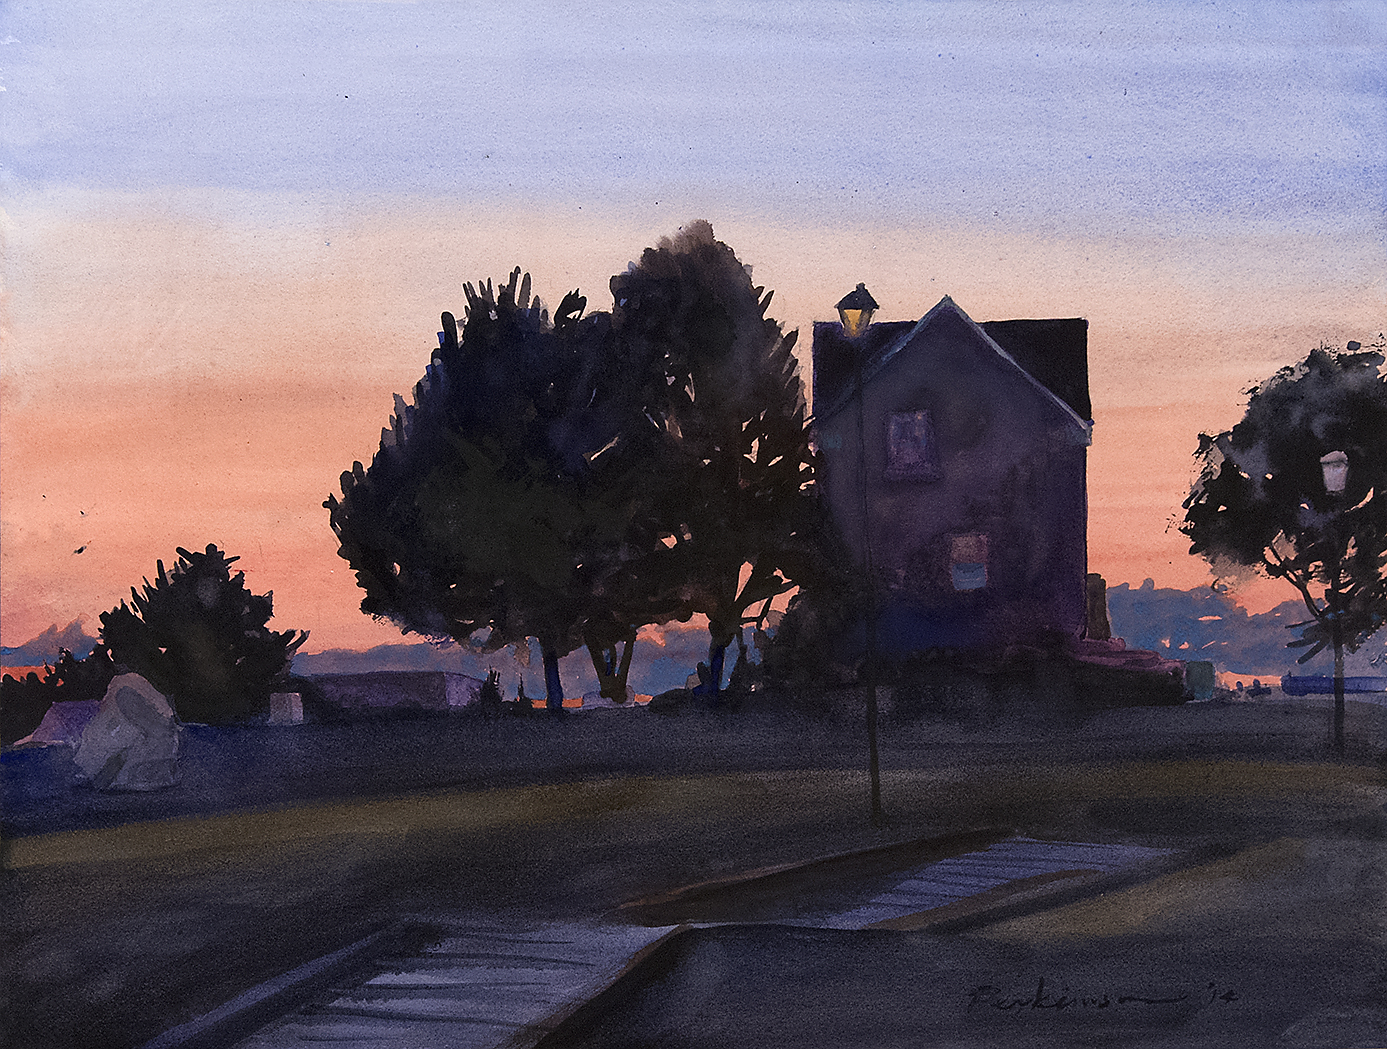   Lane House, Dusk,  watercolor, 18x24,  SOLD  